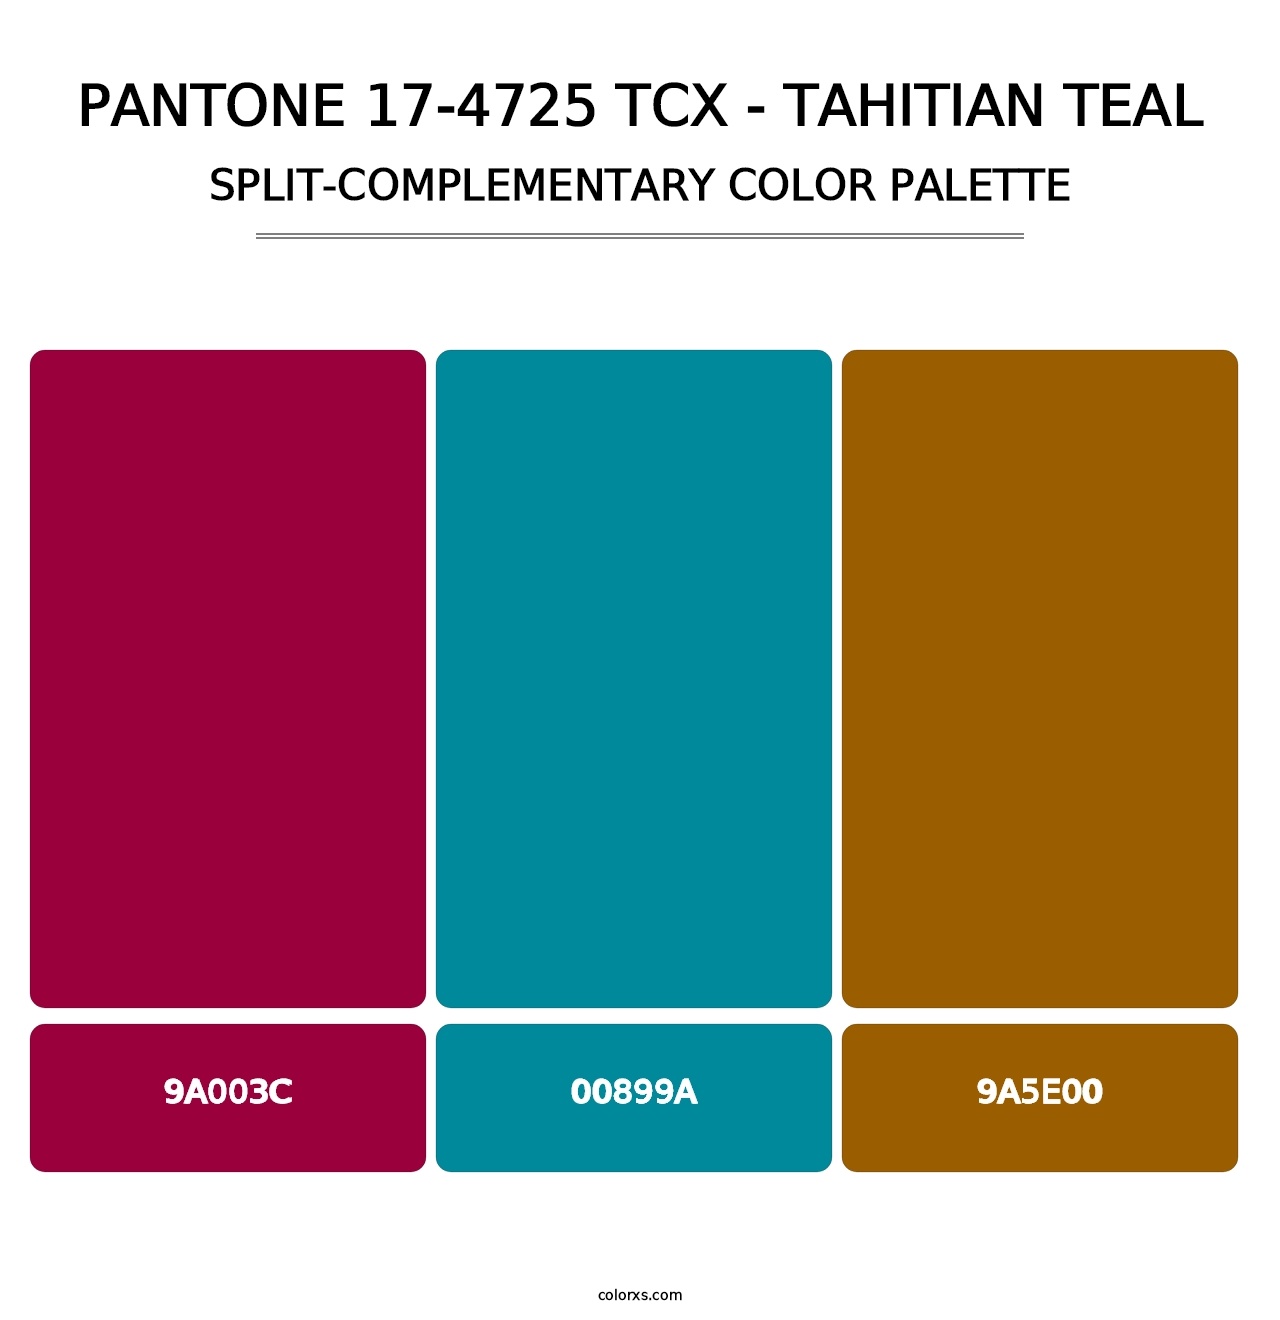 PANTONE 17-4725 TCX - Tahitian Teal - Split-Complementary Color Palette